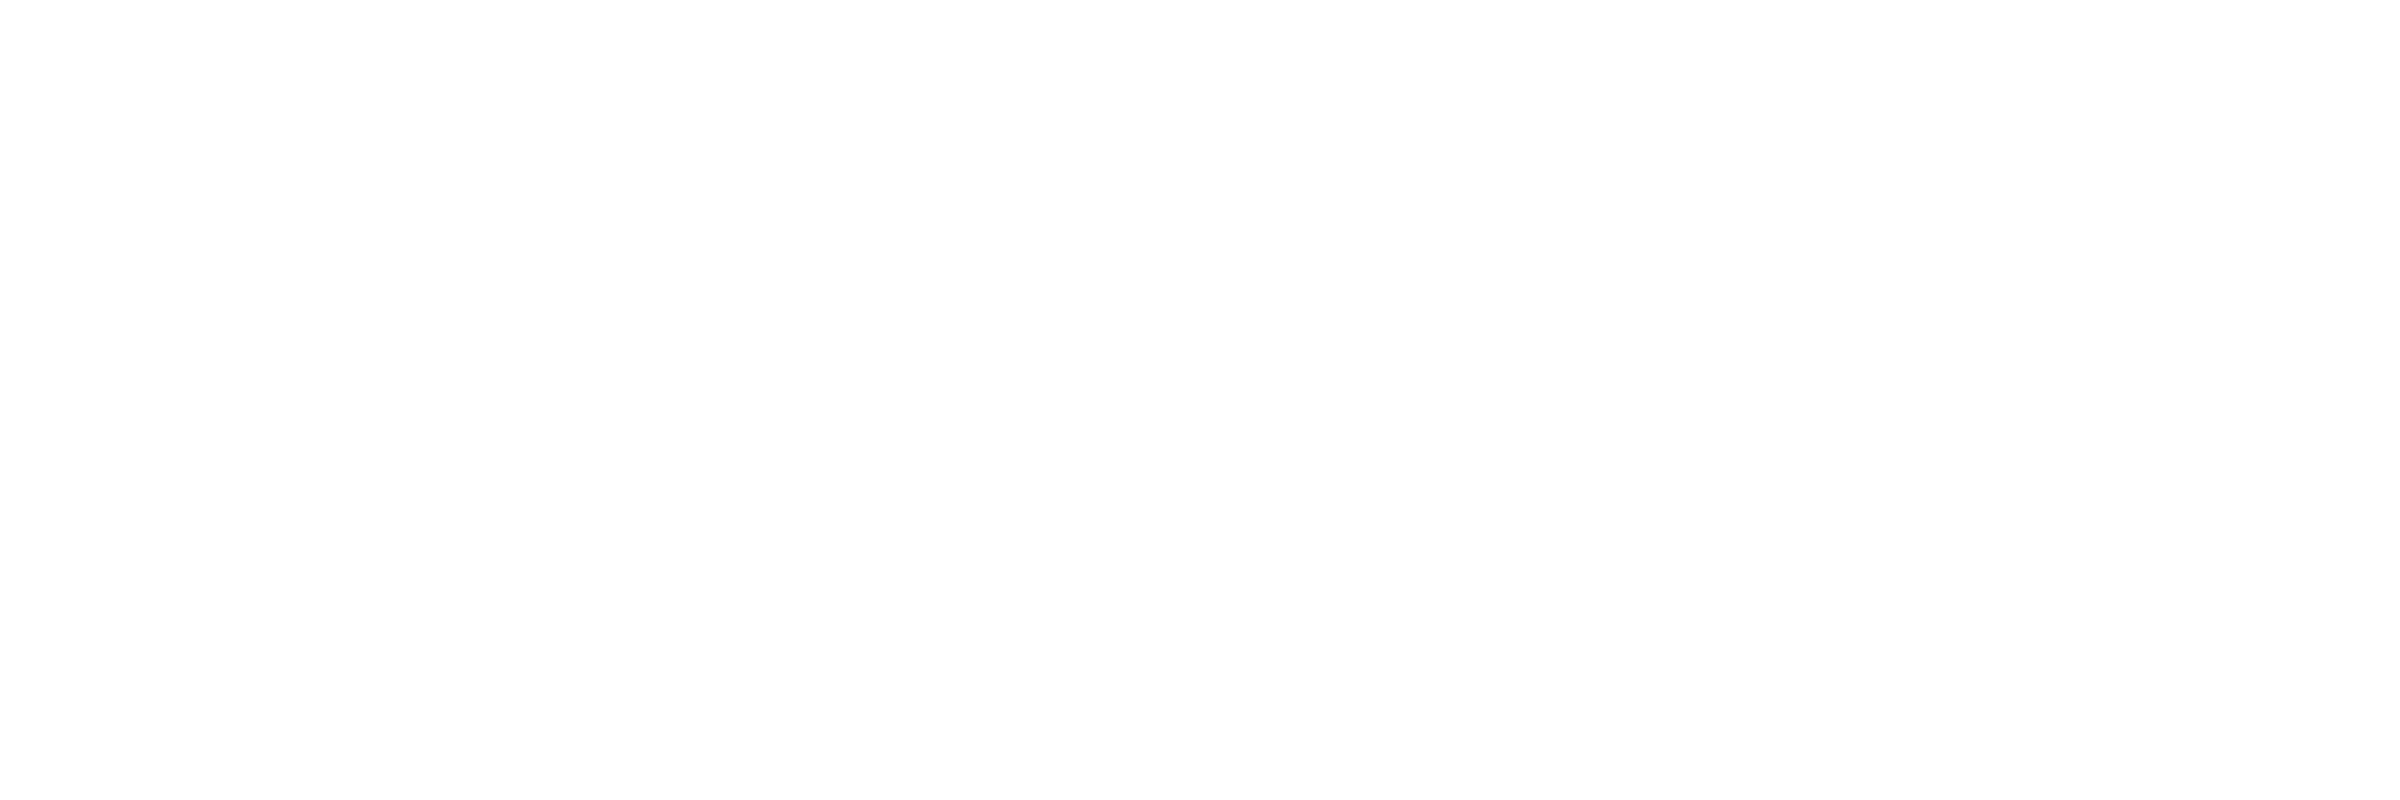 Xxx Kidneping Dardnak Rep - bodyright - Own your body online | Bodily Integrity | UNFPA